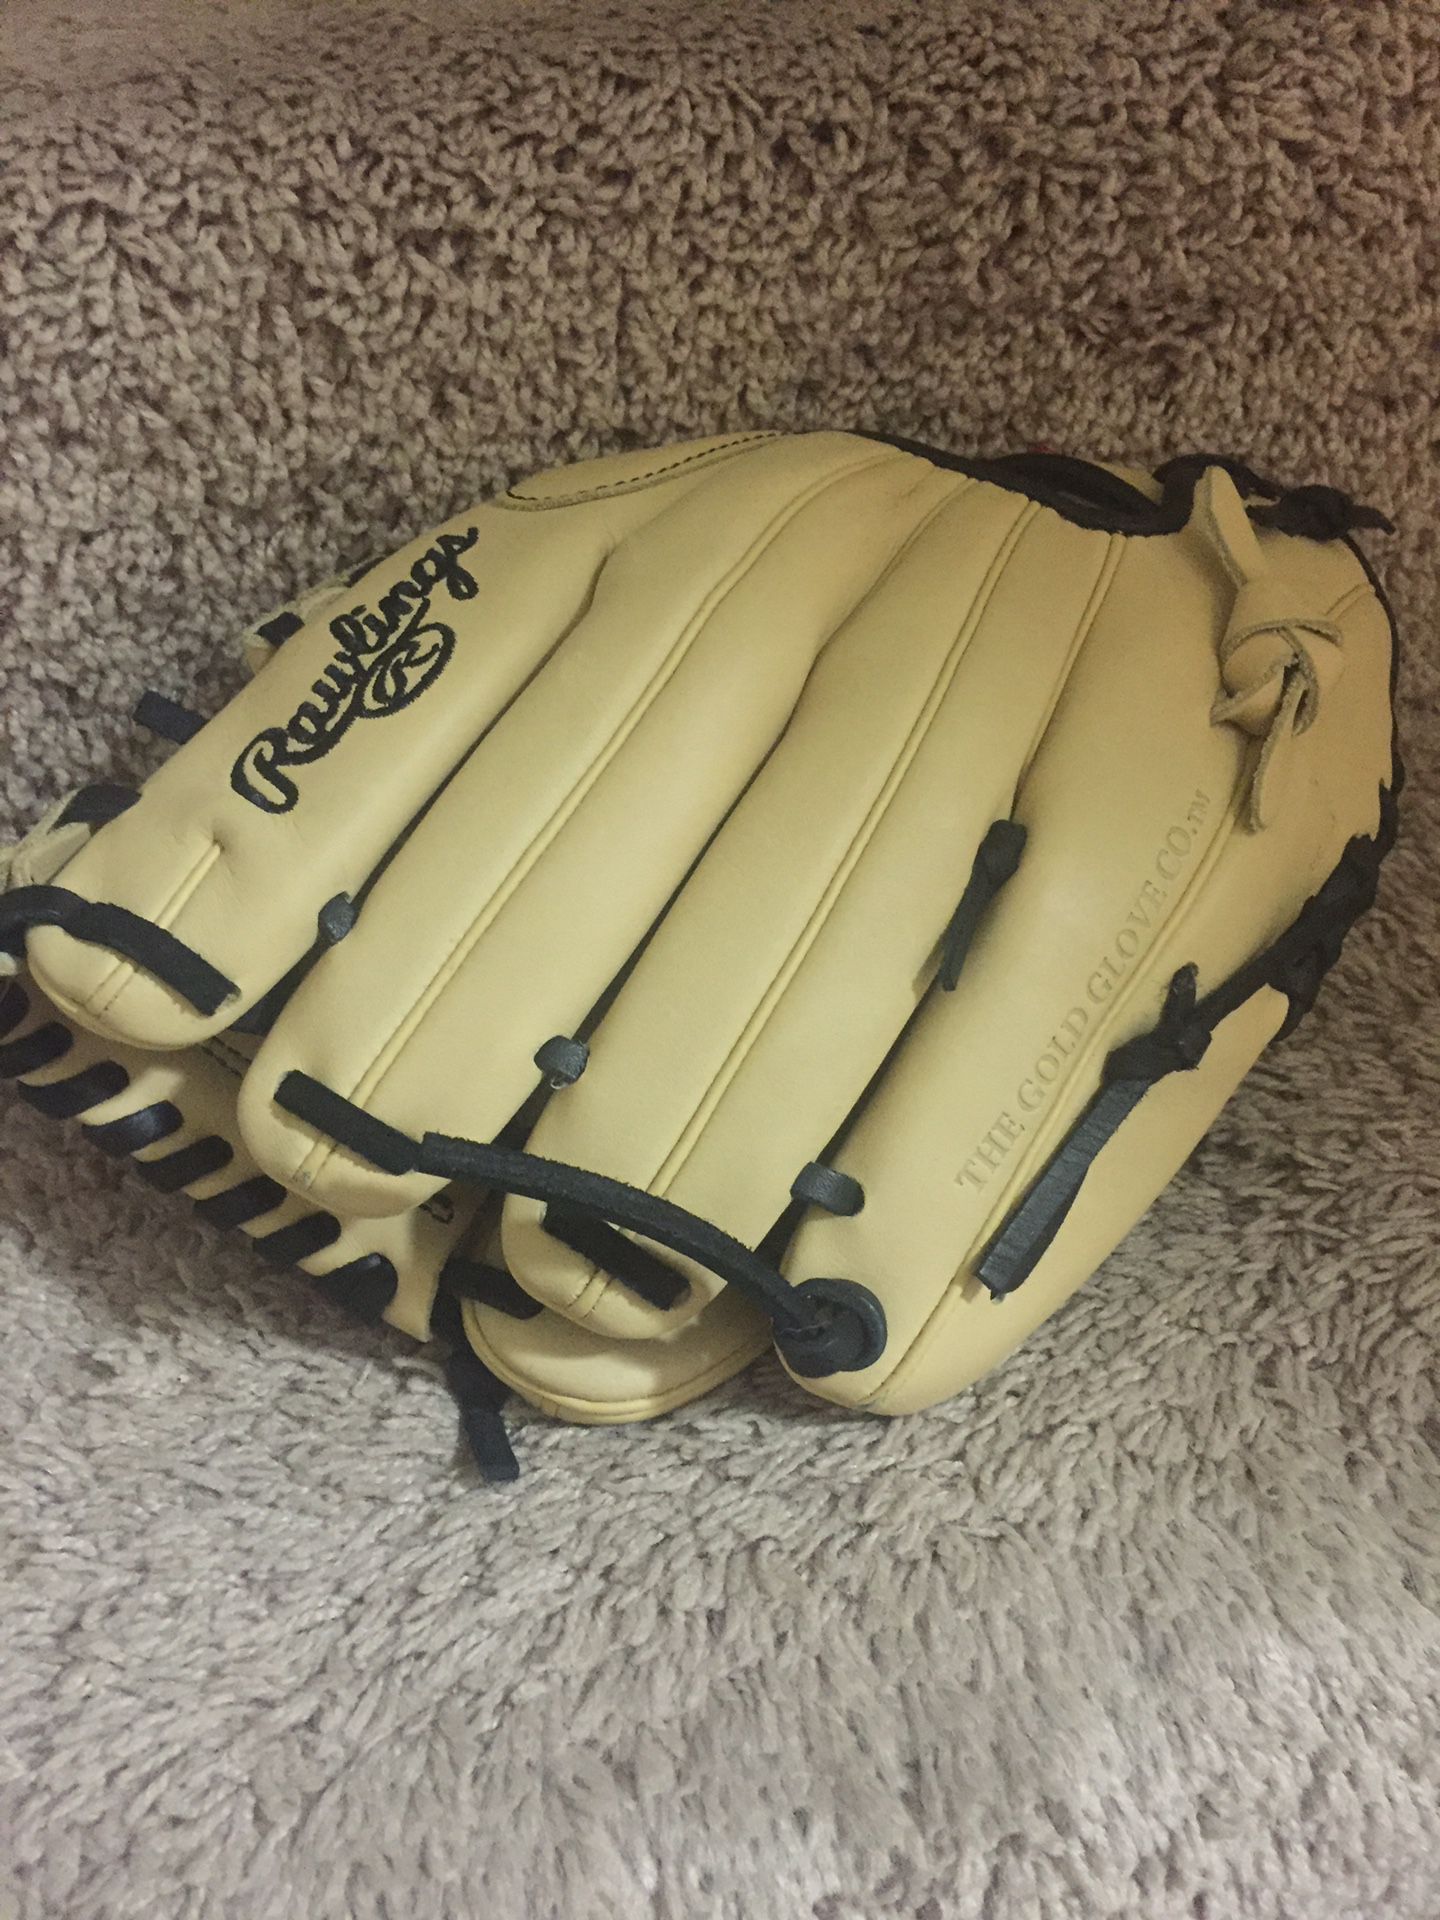 Rawling baseball glove